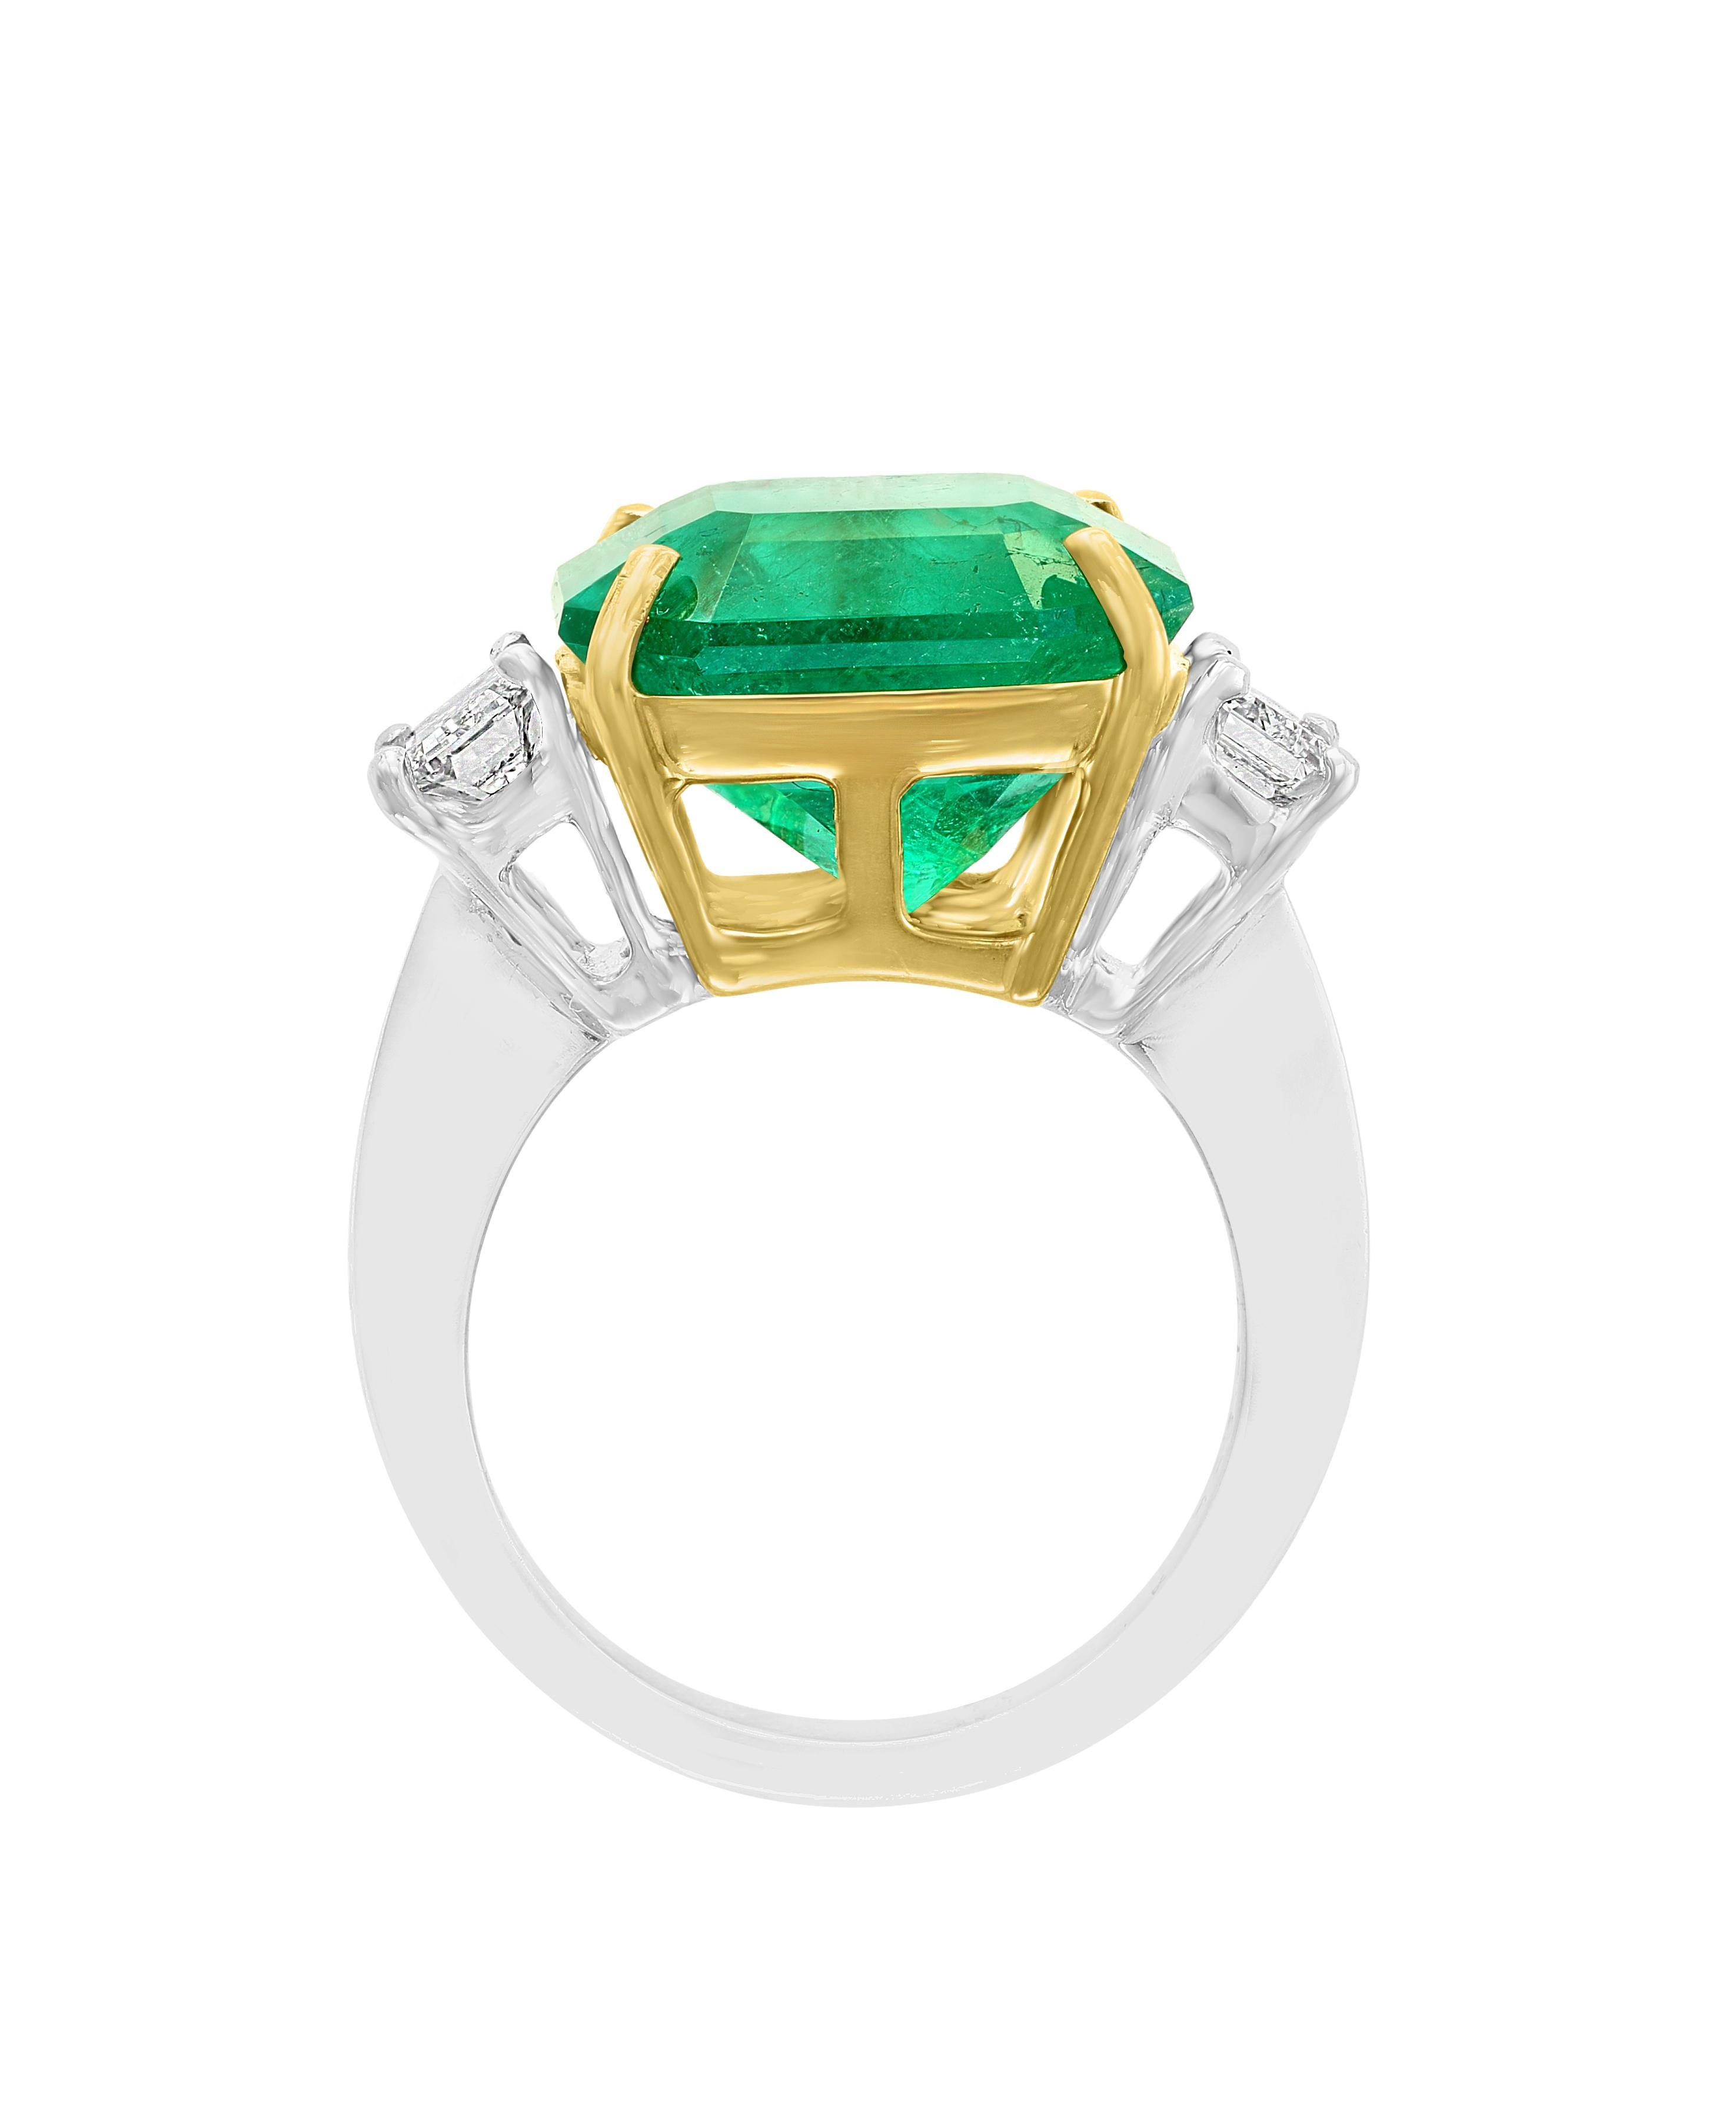 9.5 carat diamond ring